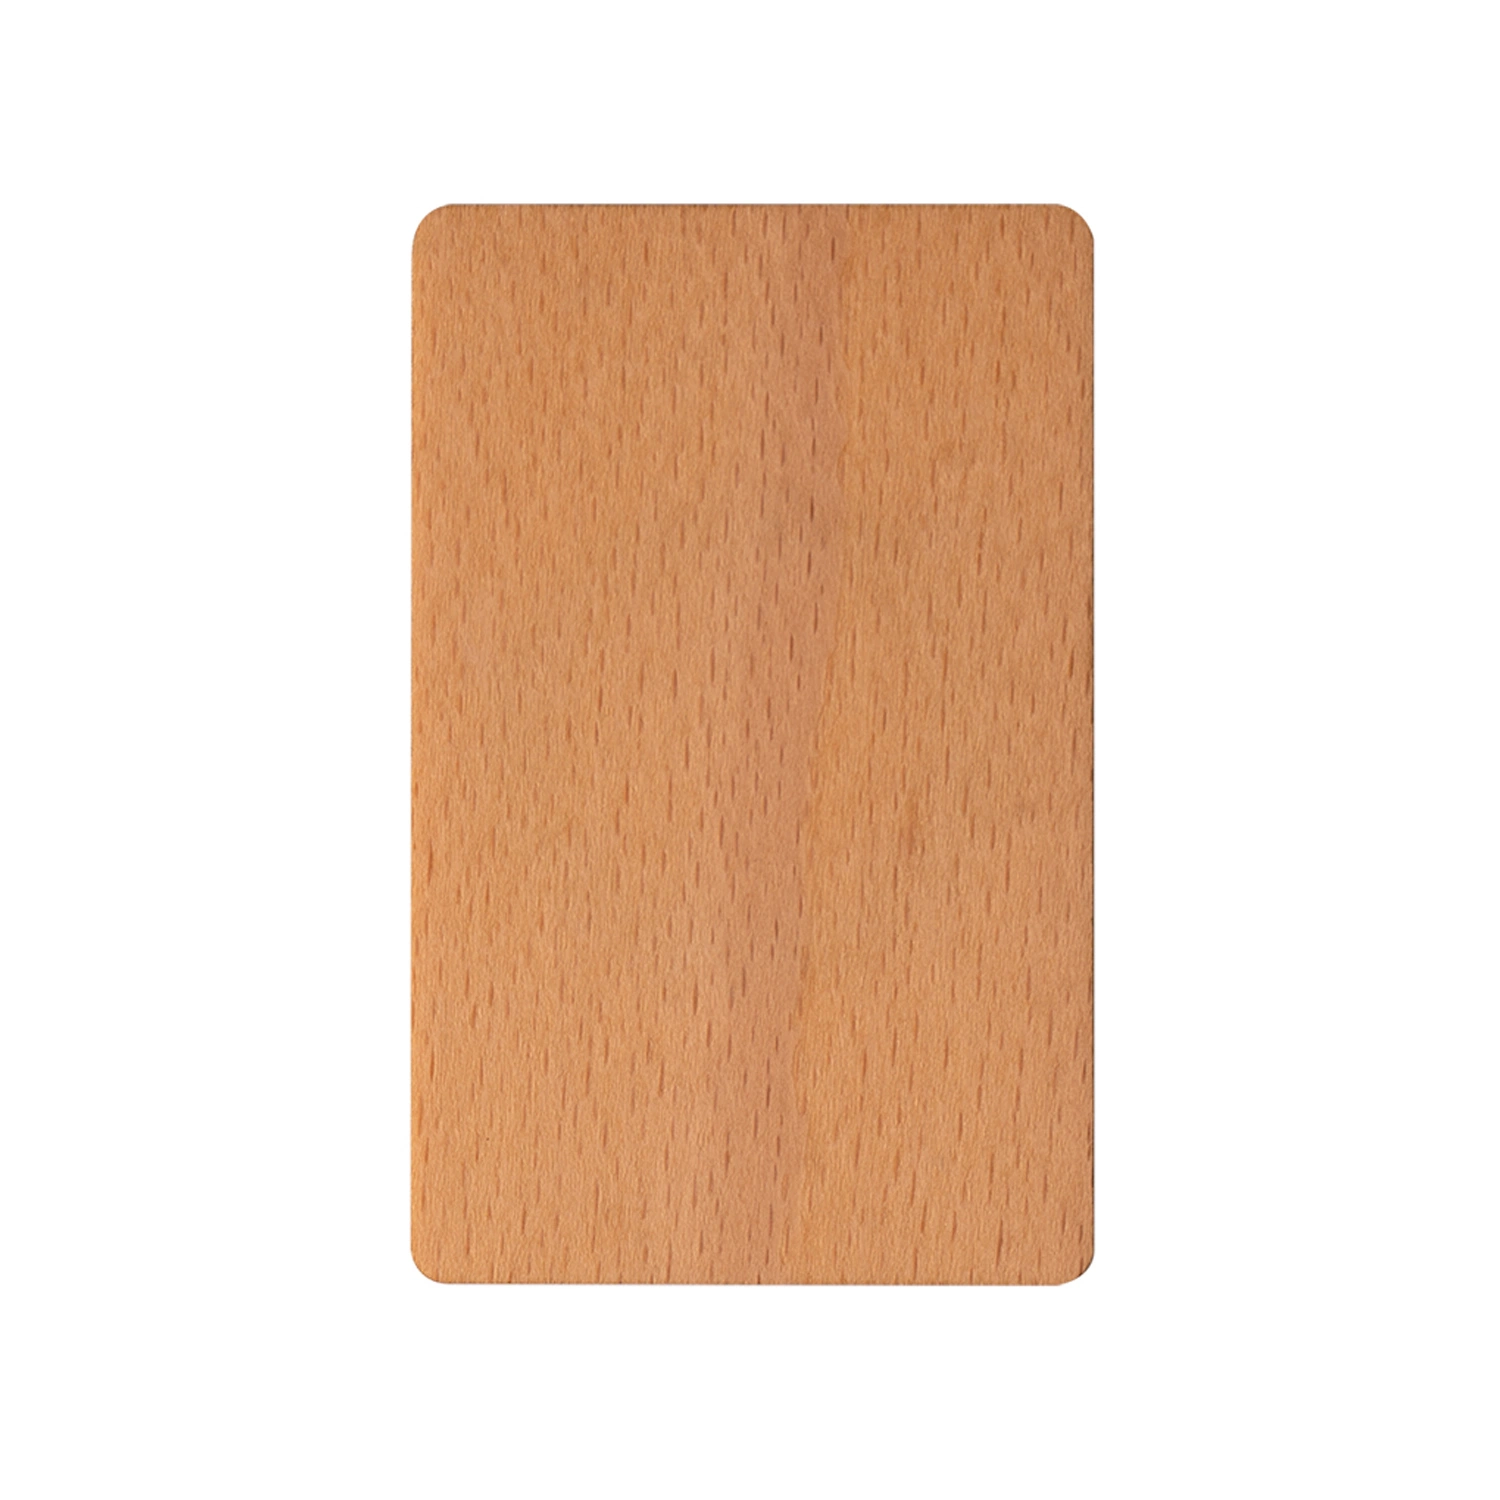 Wood NFC Card Wood RFID Card Wooden Hote Key Card